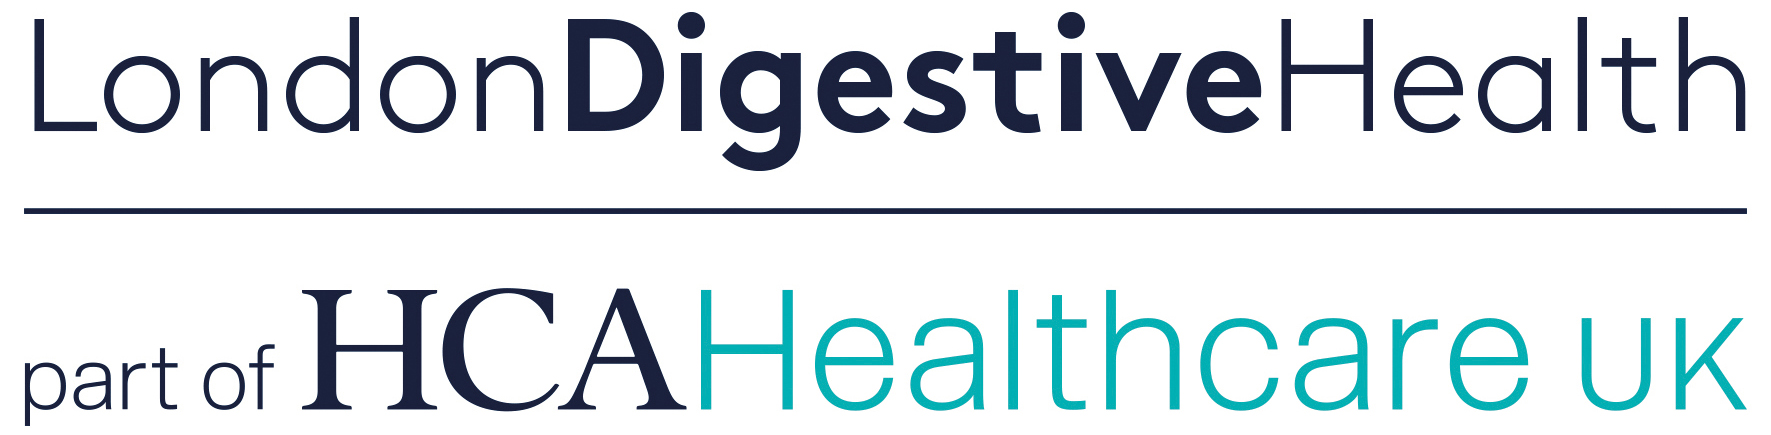 London Digestive Health_clinic